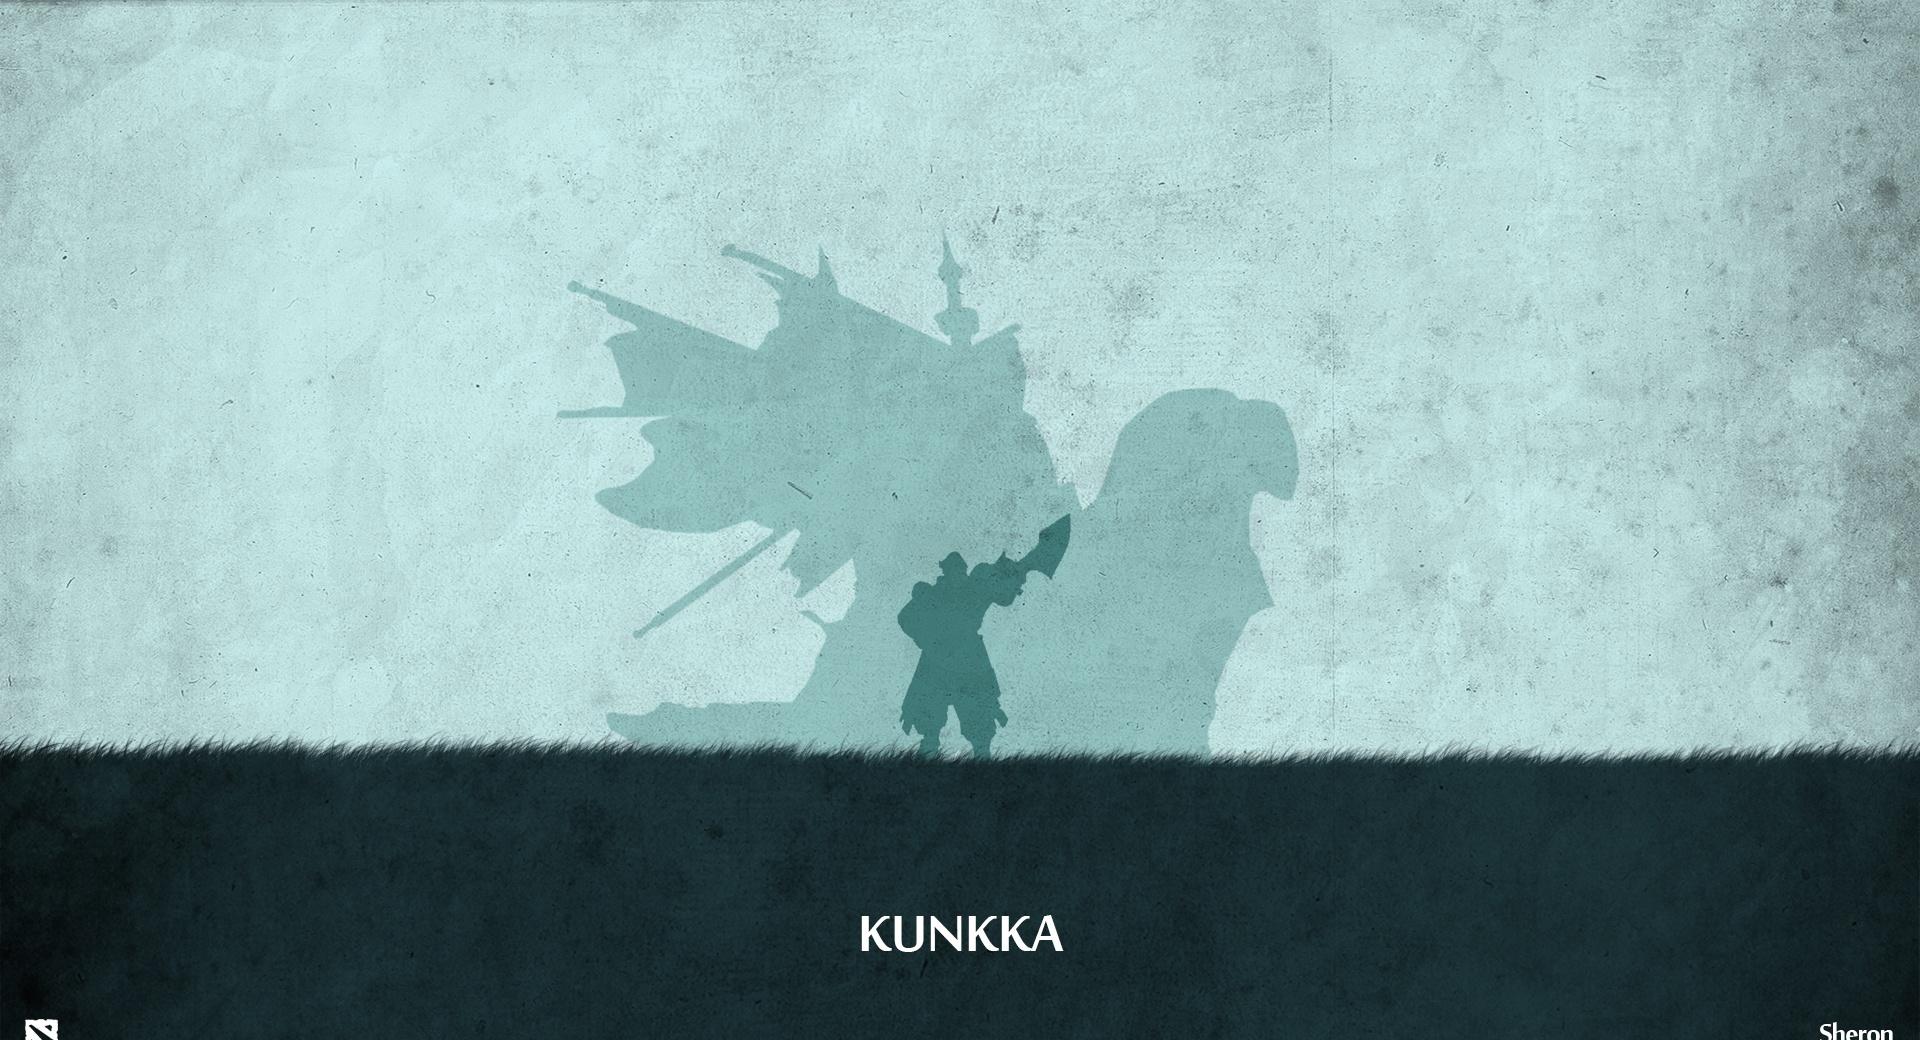 Kunkka - DotA 2 at 1280 x 960 size wallpapers HD quality